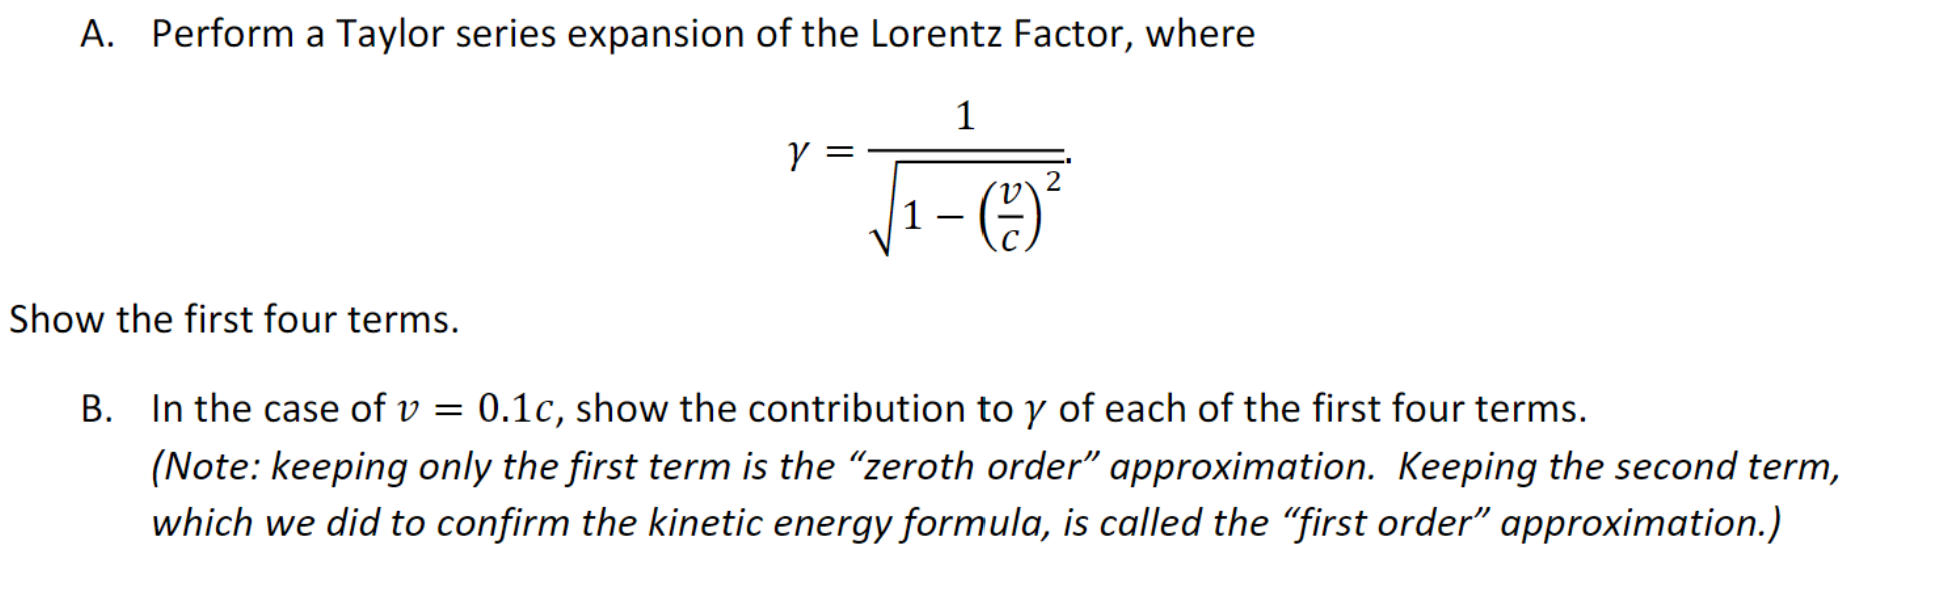 https://www.chegg.com/homework-help/questions-and-answers/-perform-taylor-series-expansion-lorentz-factor-gamma-frac-1-sqrt-1-left-frac-v-c-right-2--q101373525